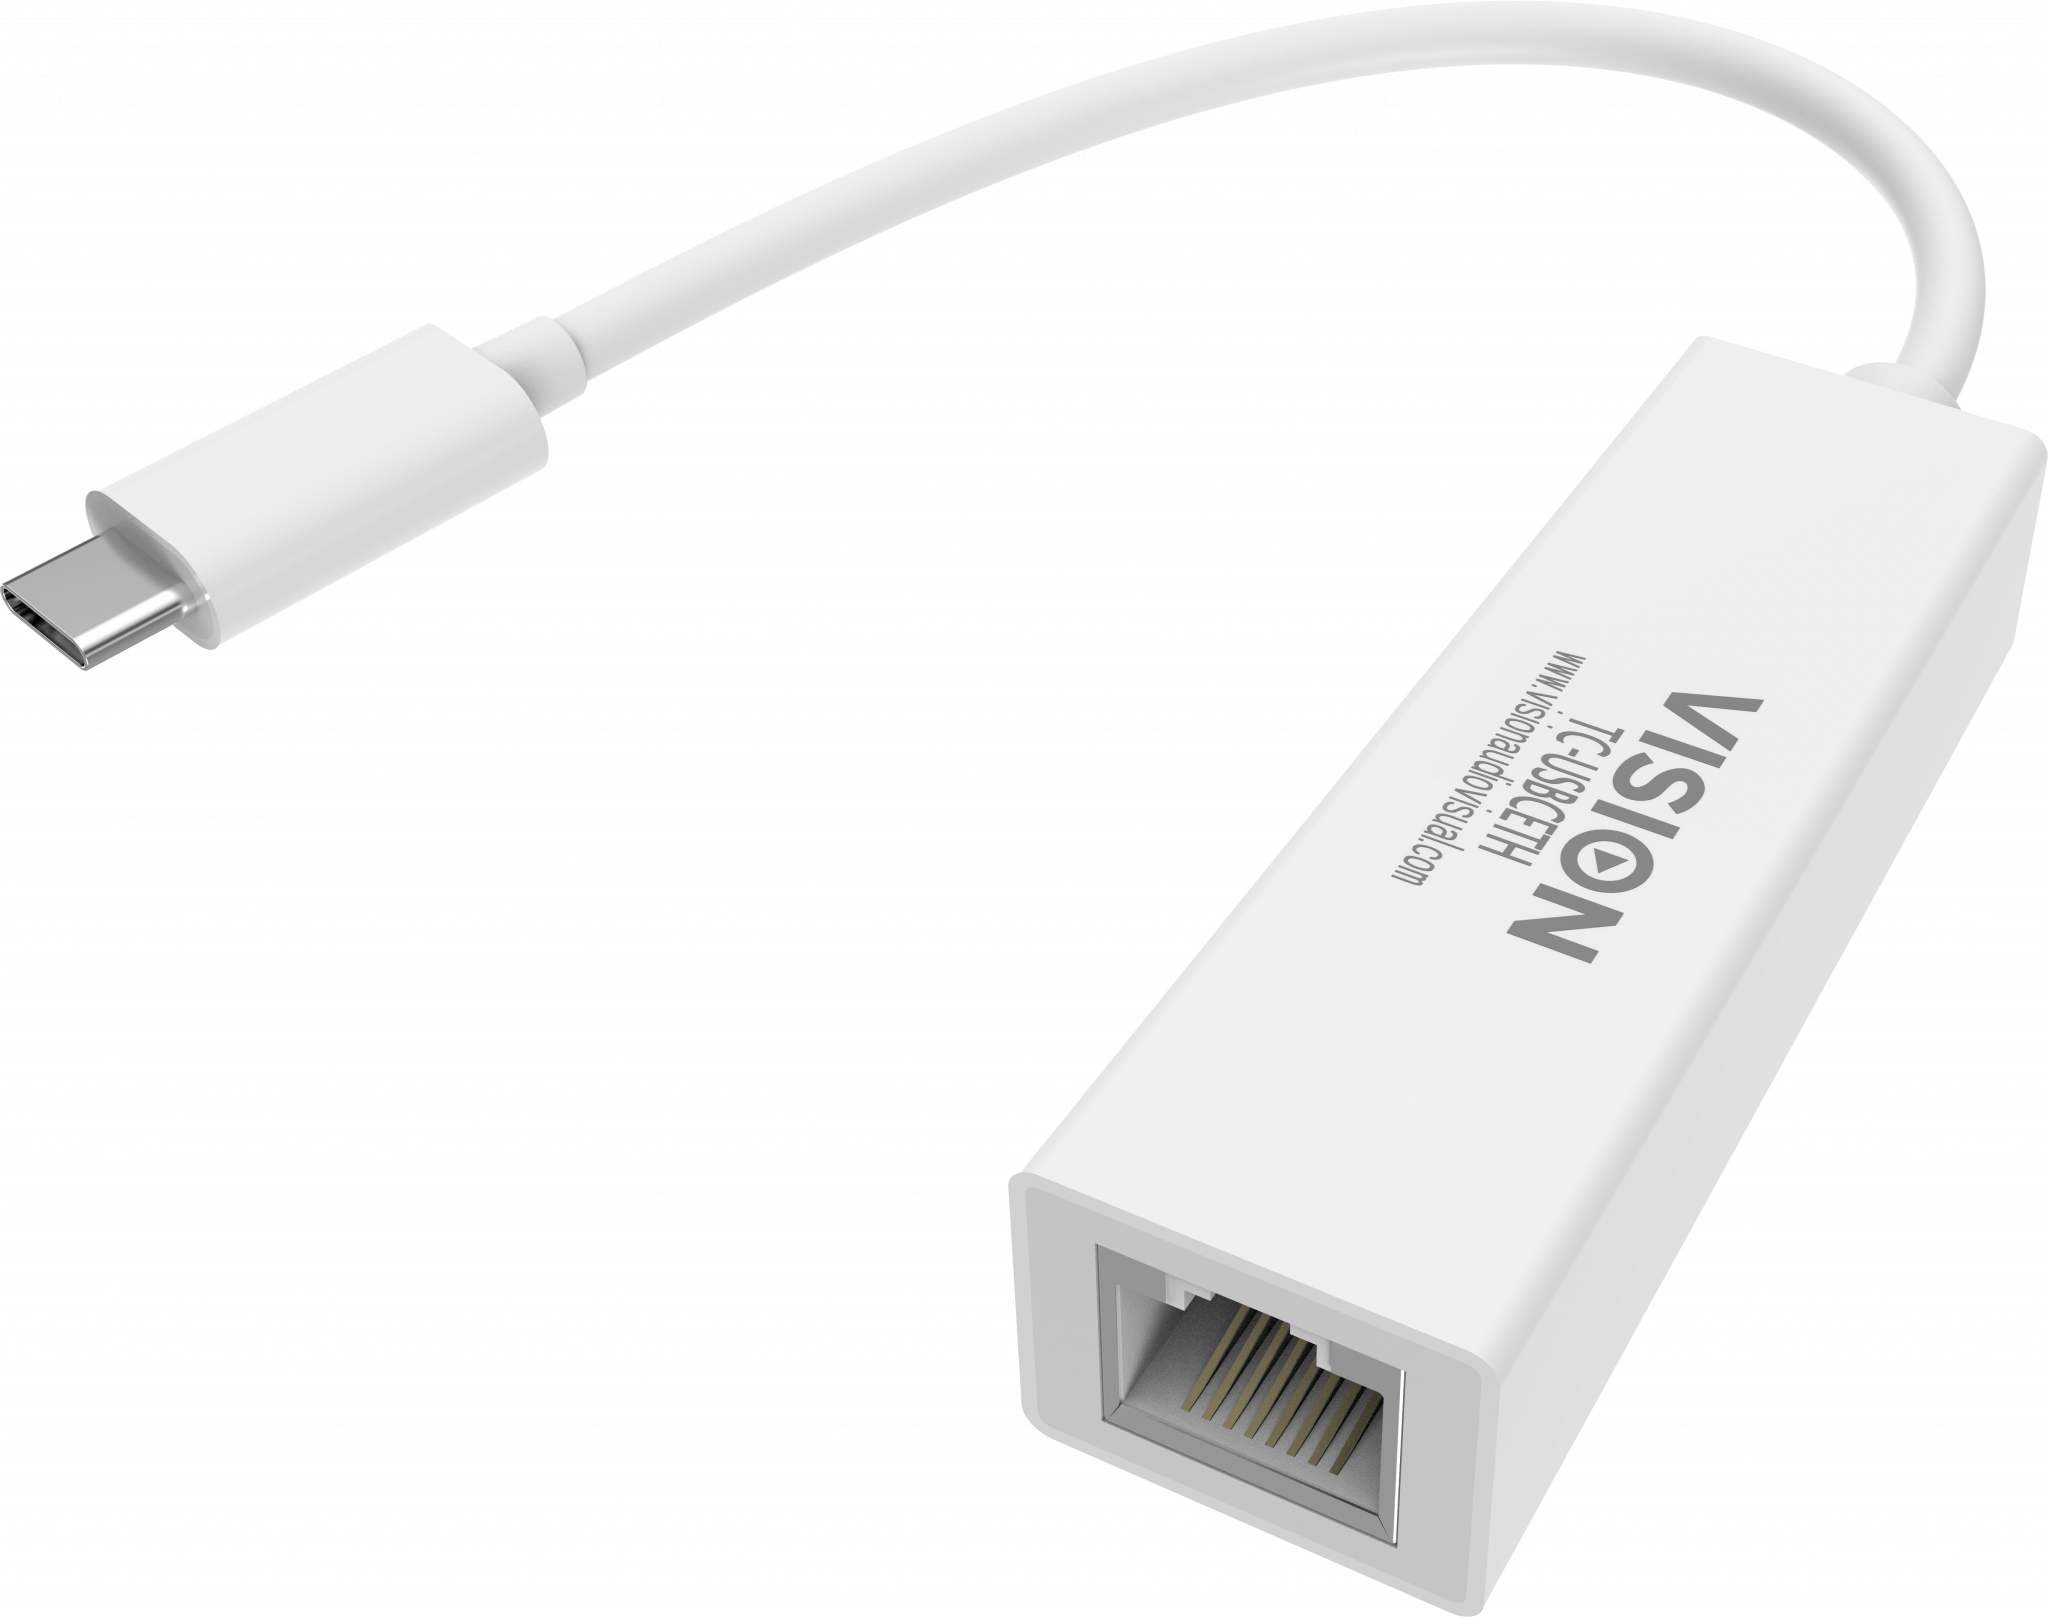 An image showing Adattatore professionale da USB-C a Ethernet bianco